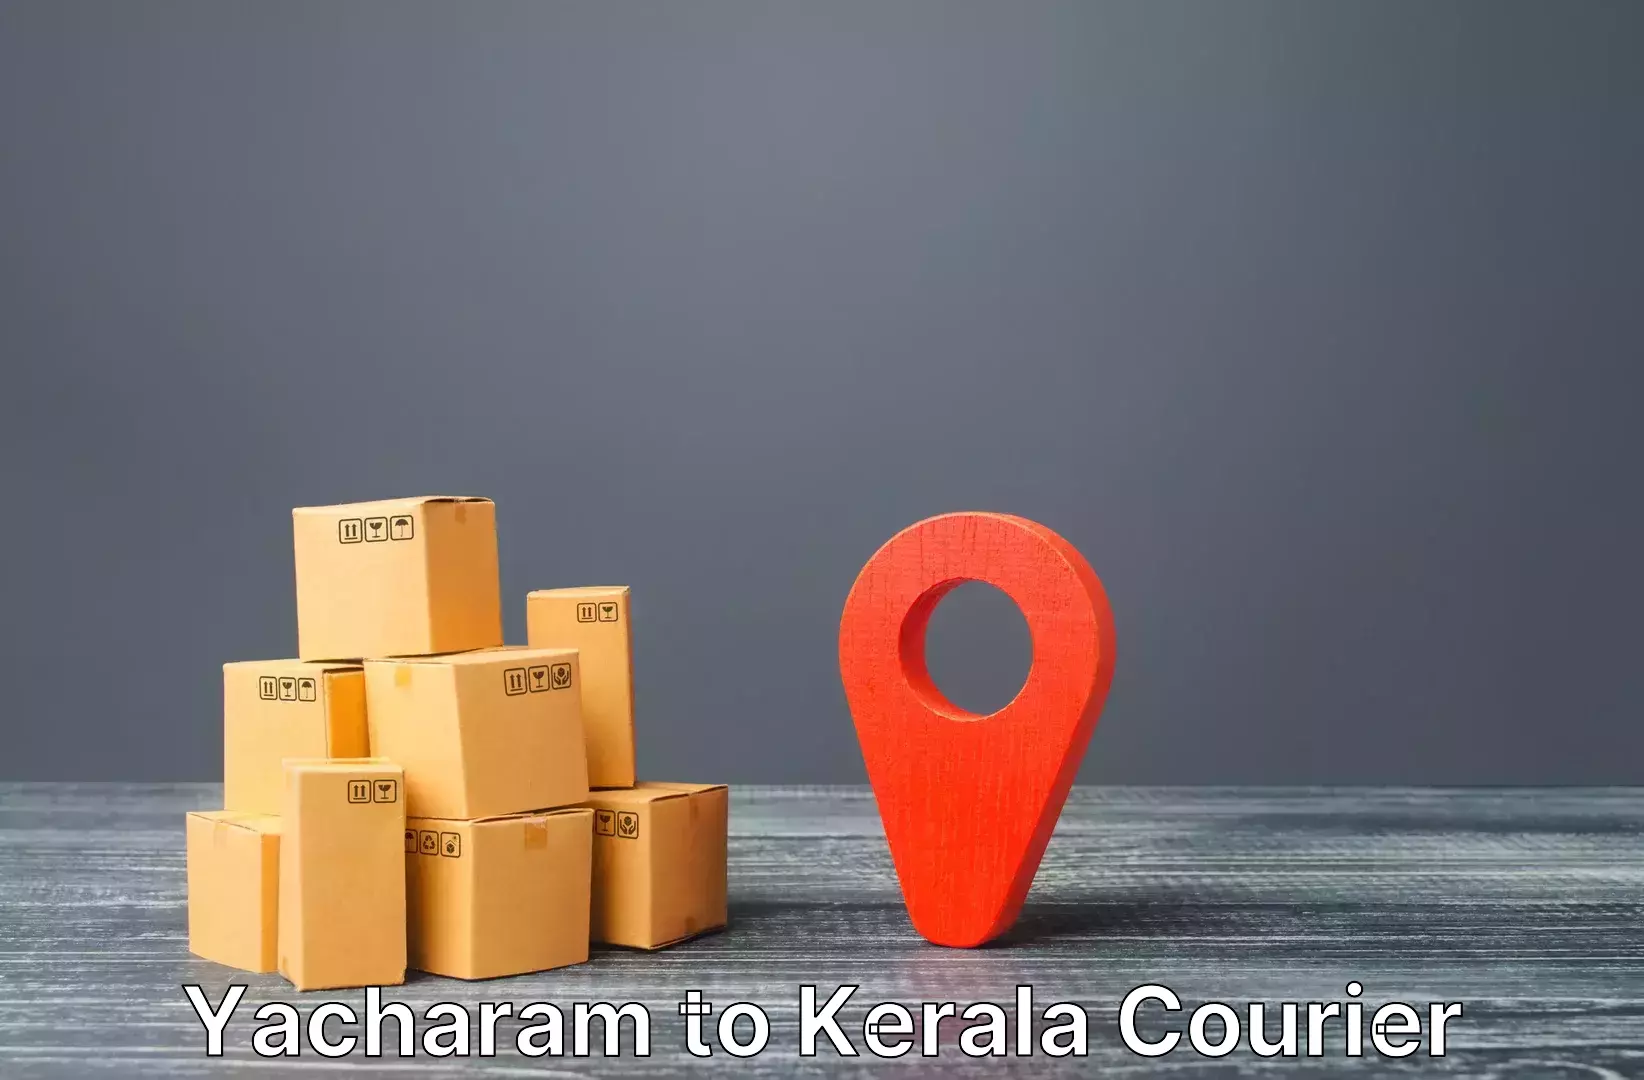 Urgent luggage shipment Yacharam to Kerala